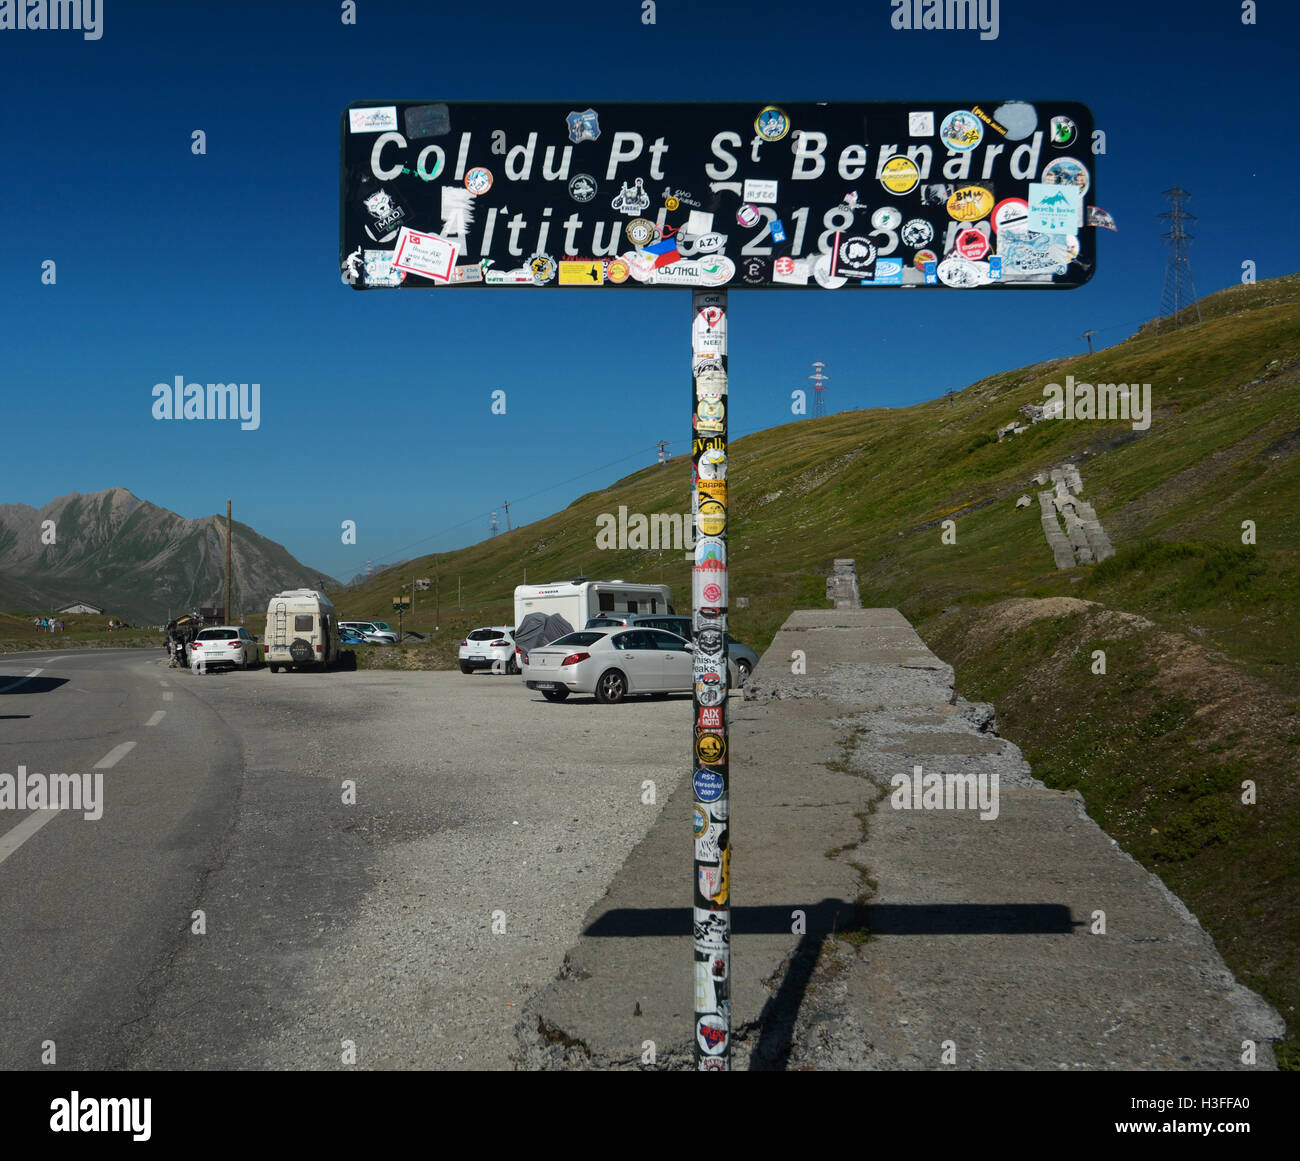 France, Italy, Col du Petit Saint Bernard pass (Little St Bernard, Piccolo San Bernardo ), summit sign with stickers Stock Photo